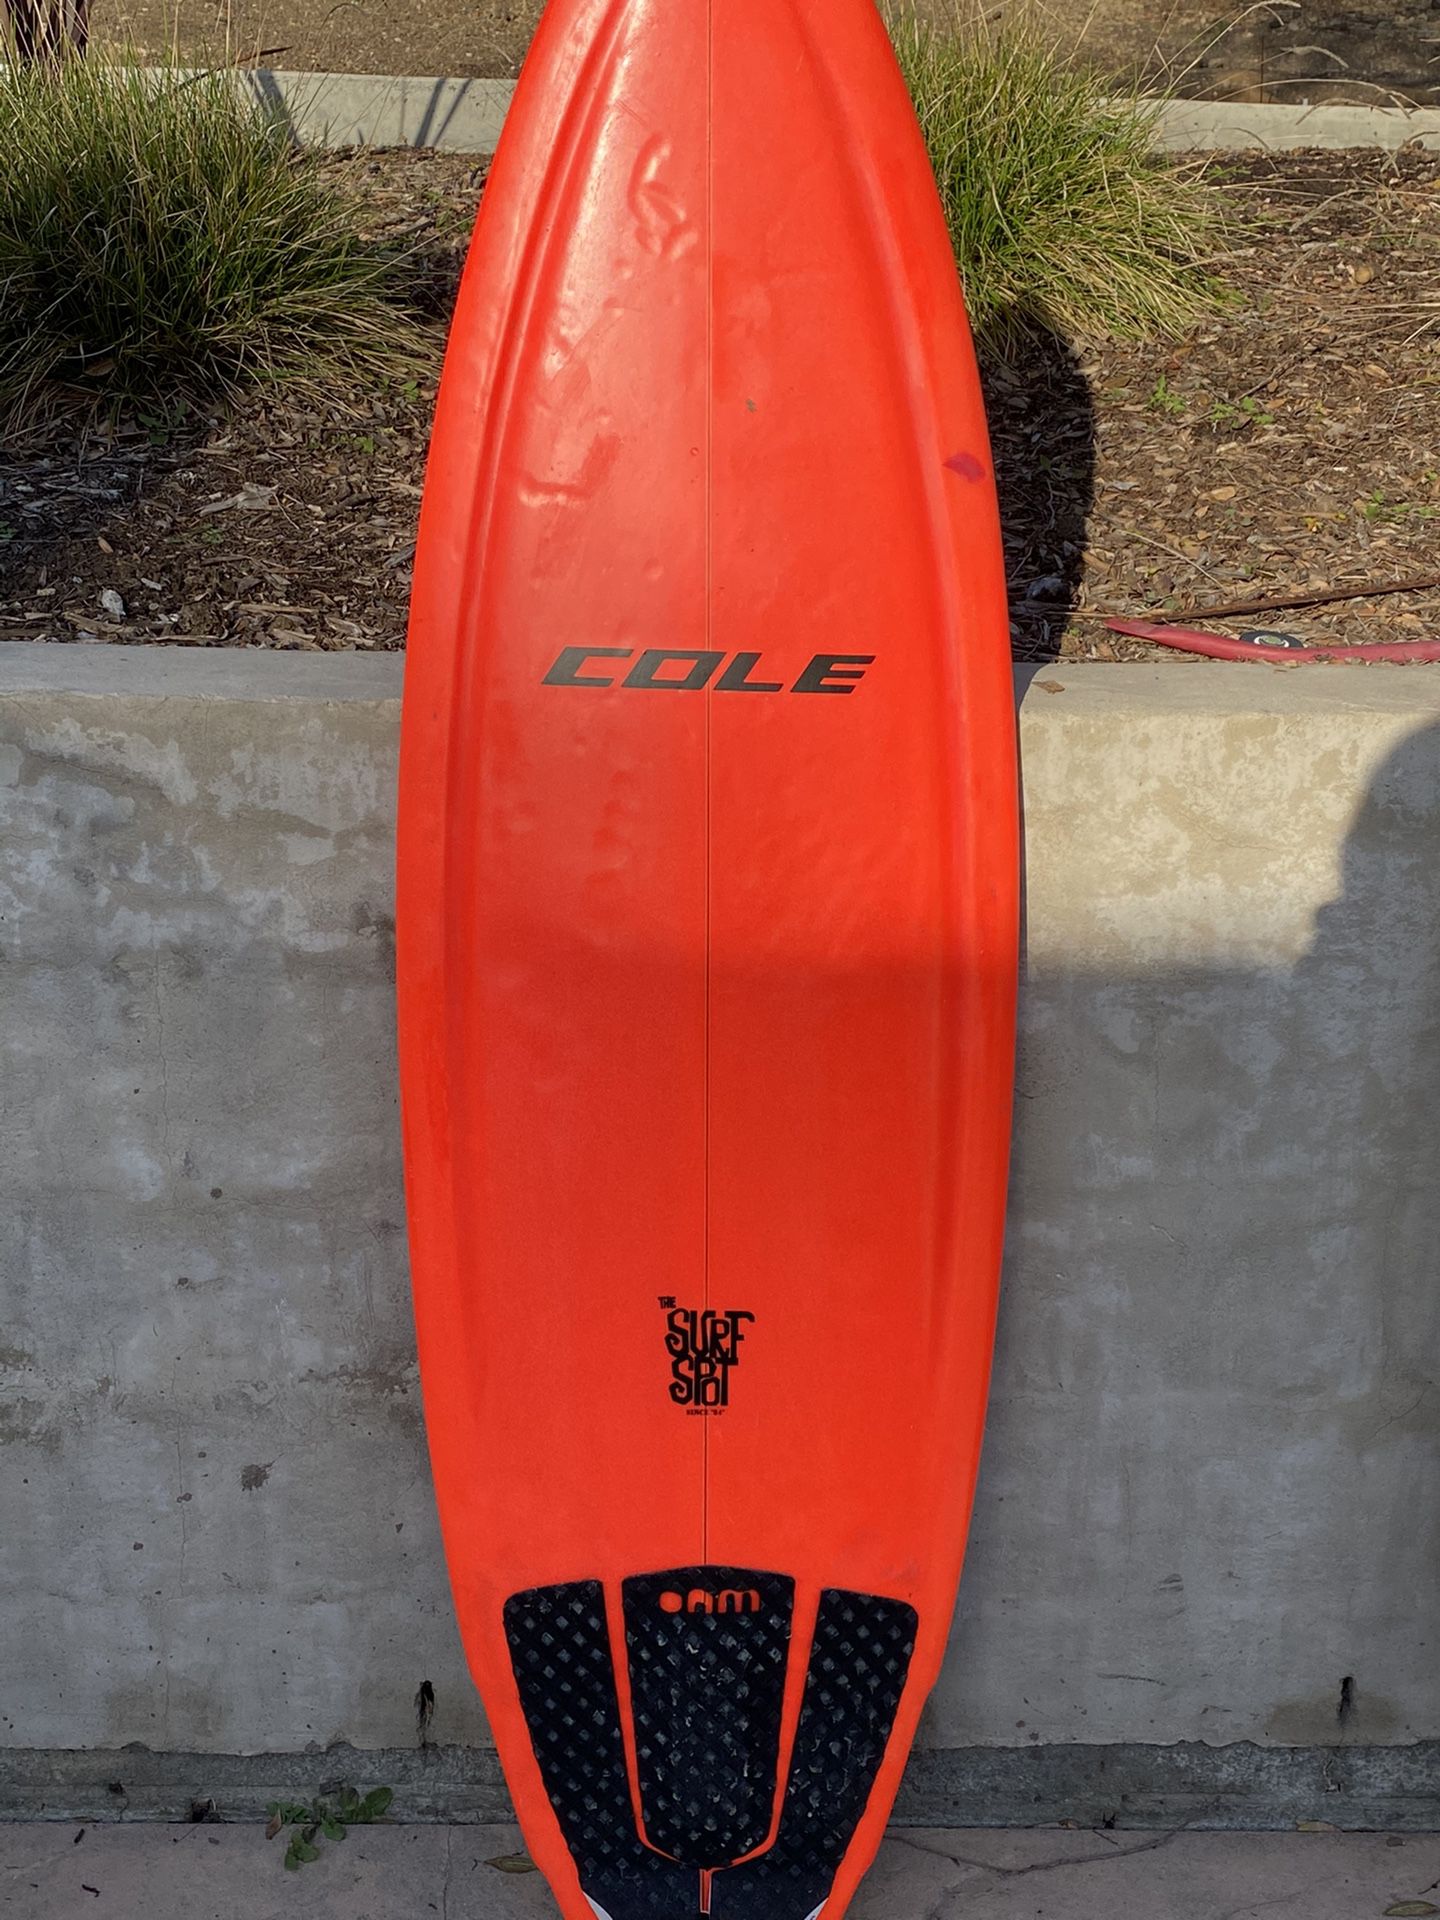 Cole surfboard